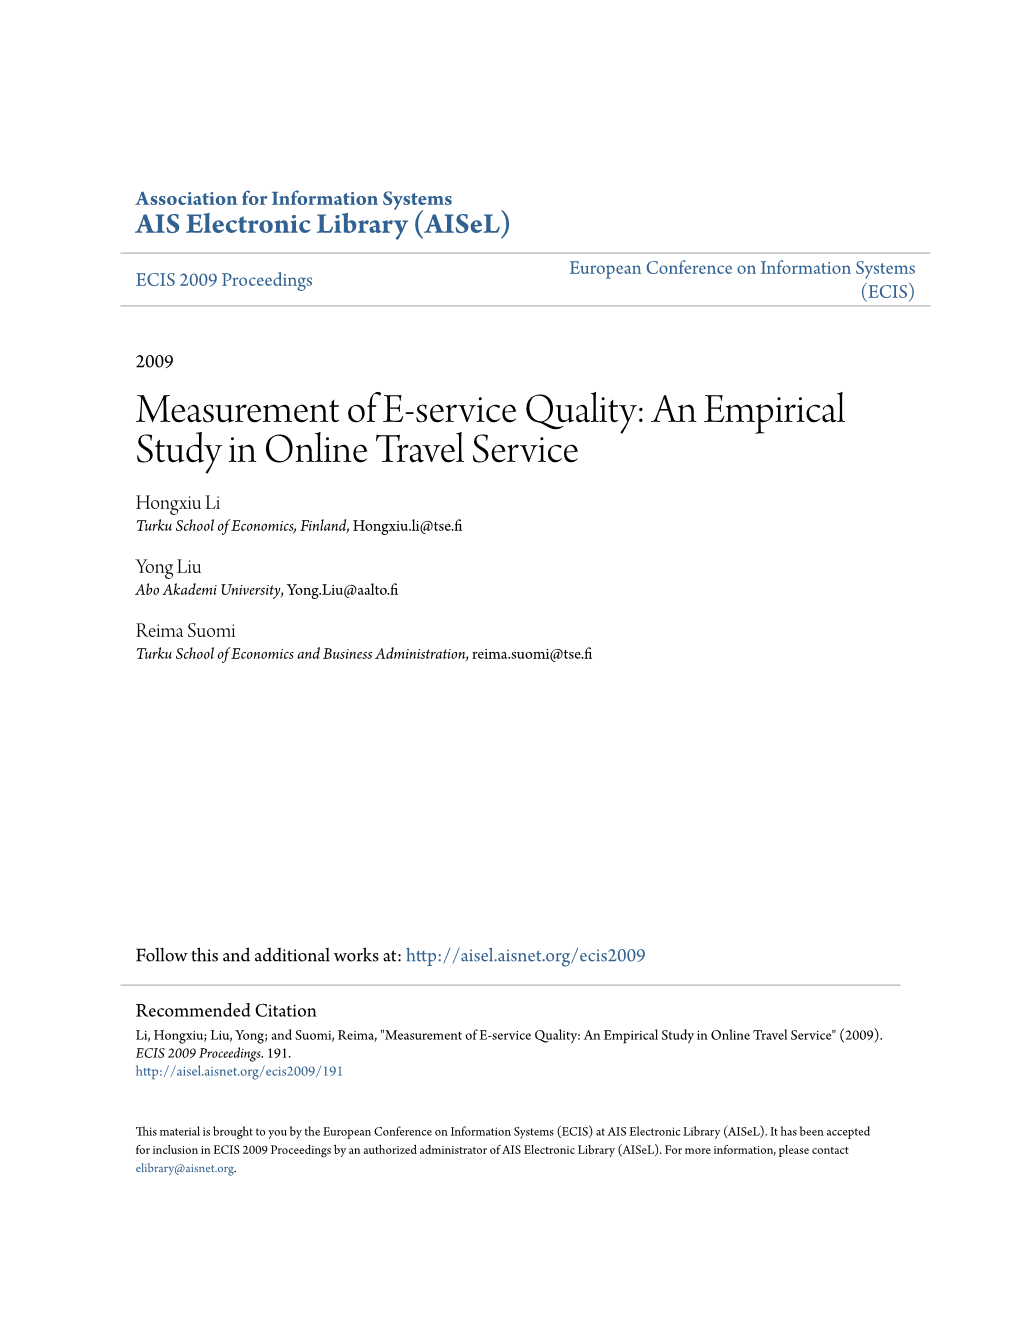 Measurement of E-Service Quality: an Empirical Study in Online Travel Service Hongxiu Li Turku School of Economics, Finland, Hongxiu.Li@Tse.Fi